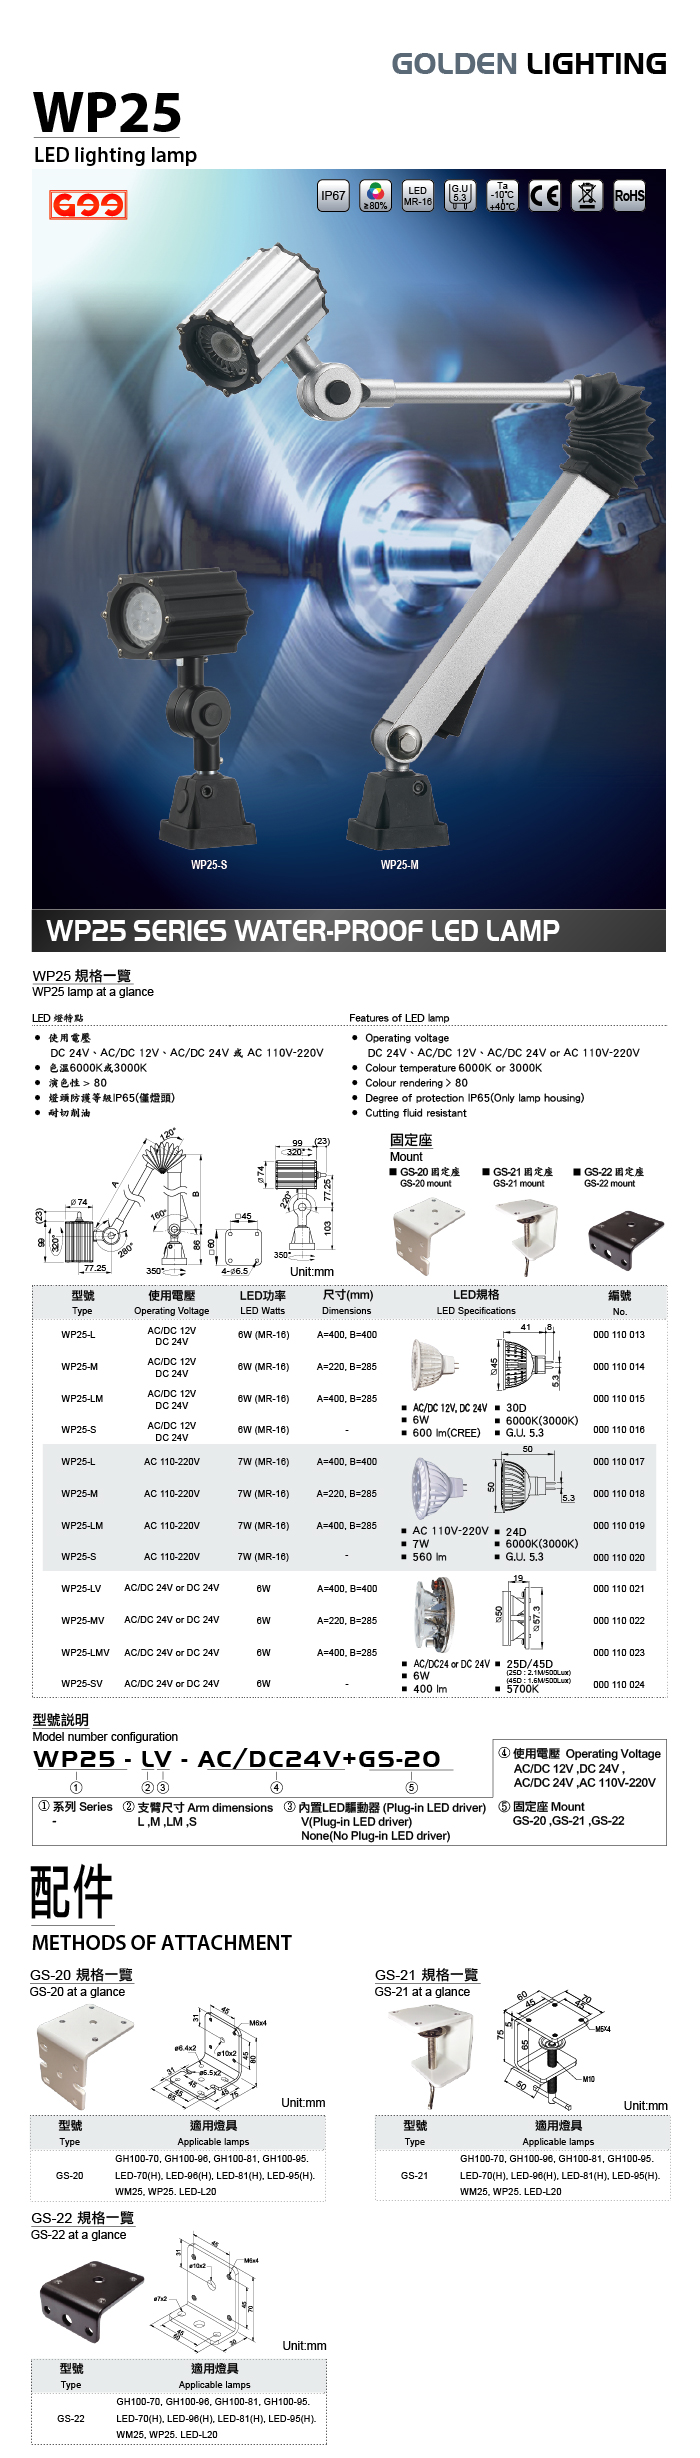 WP25 WATER-PROOF LED LIGHTING LAMP